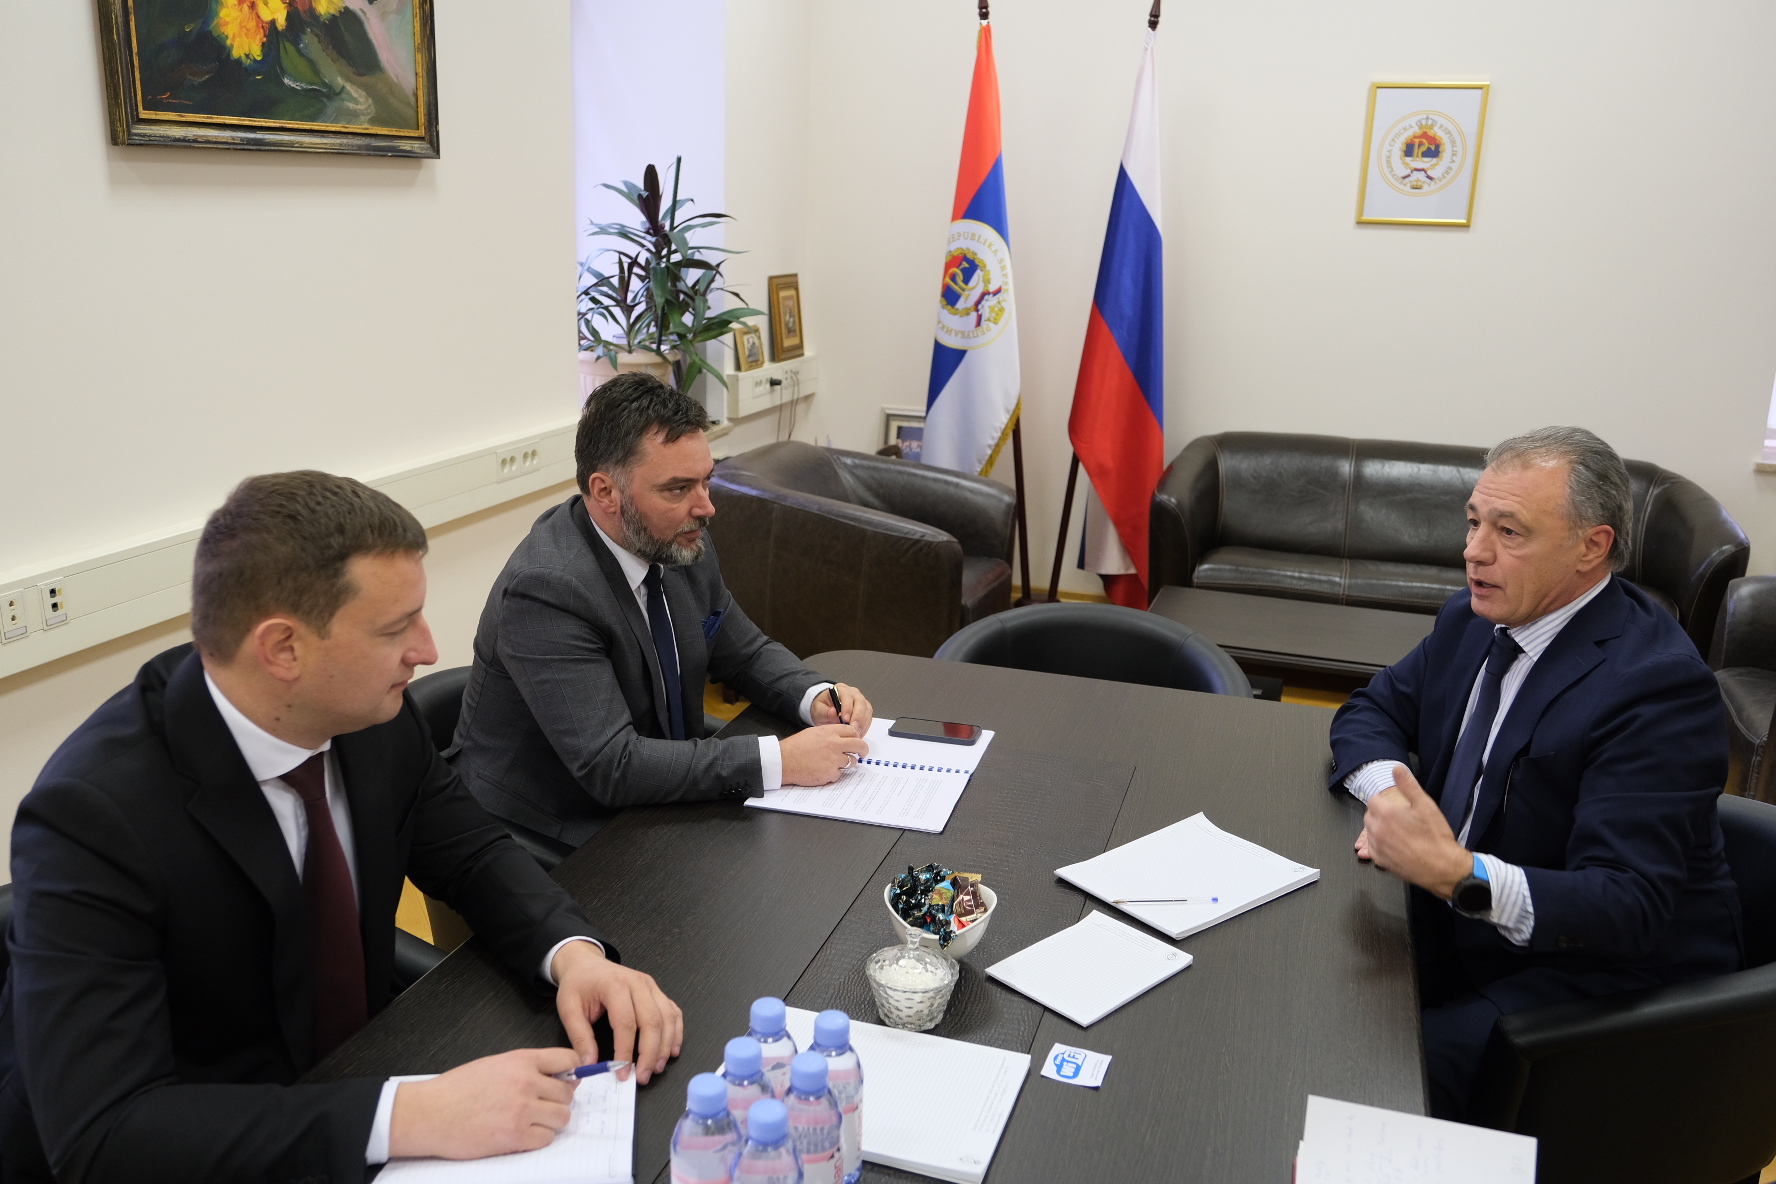 Picture for Ministar Košarac posjetio Predstavništvo Republike Srpske u Moskvi